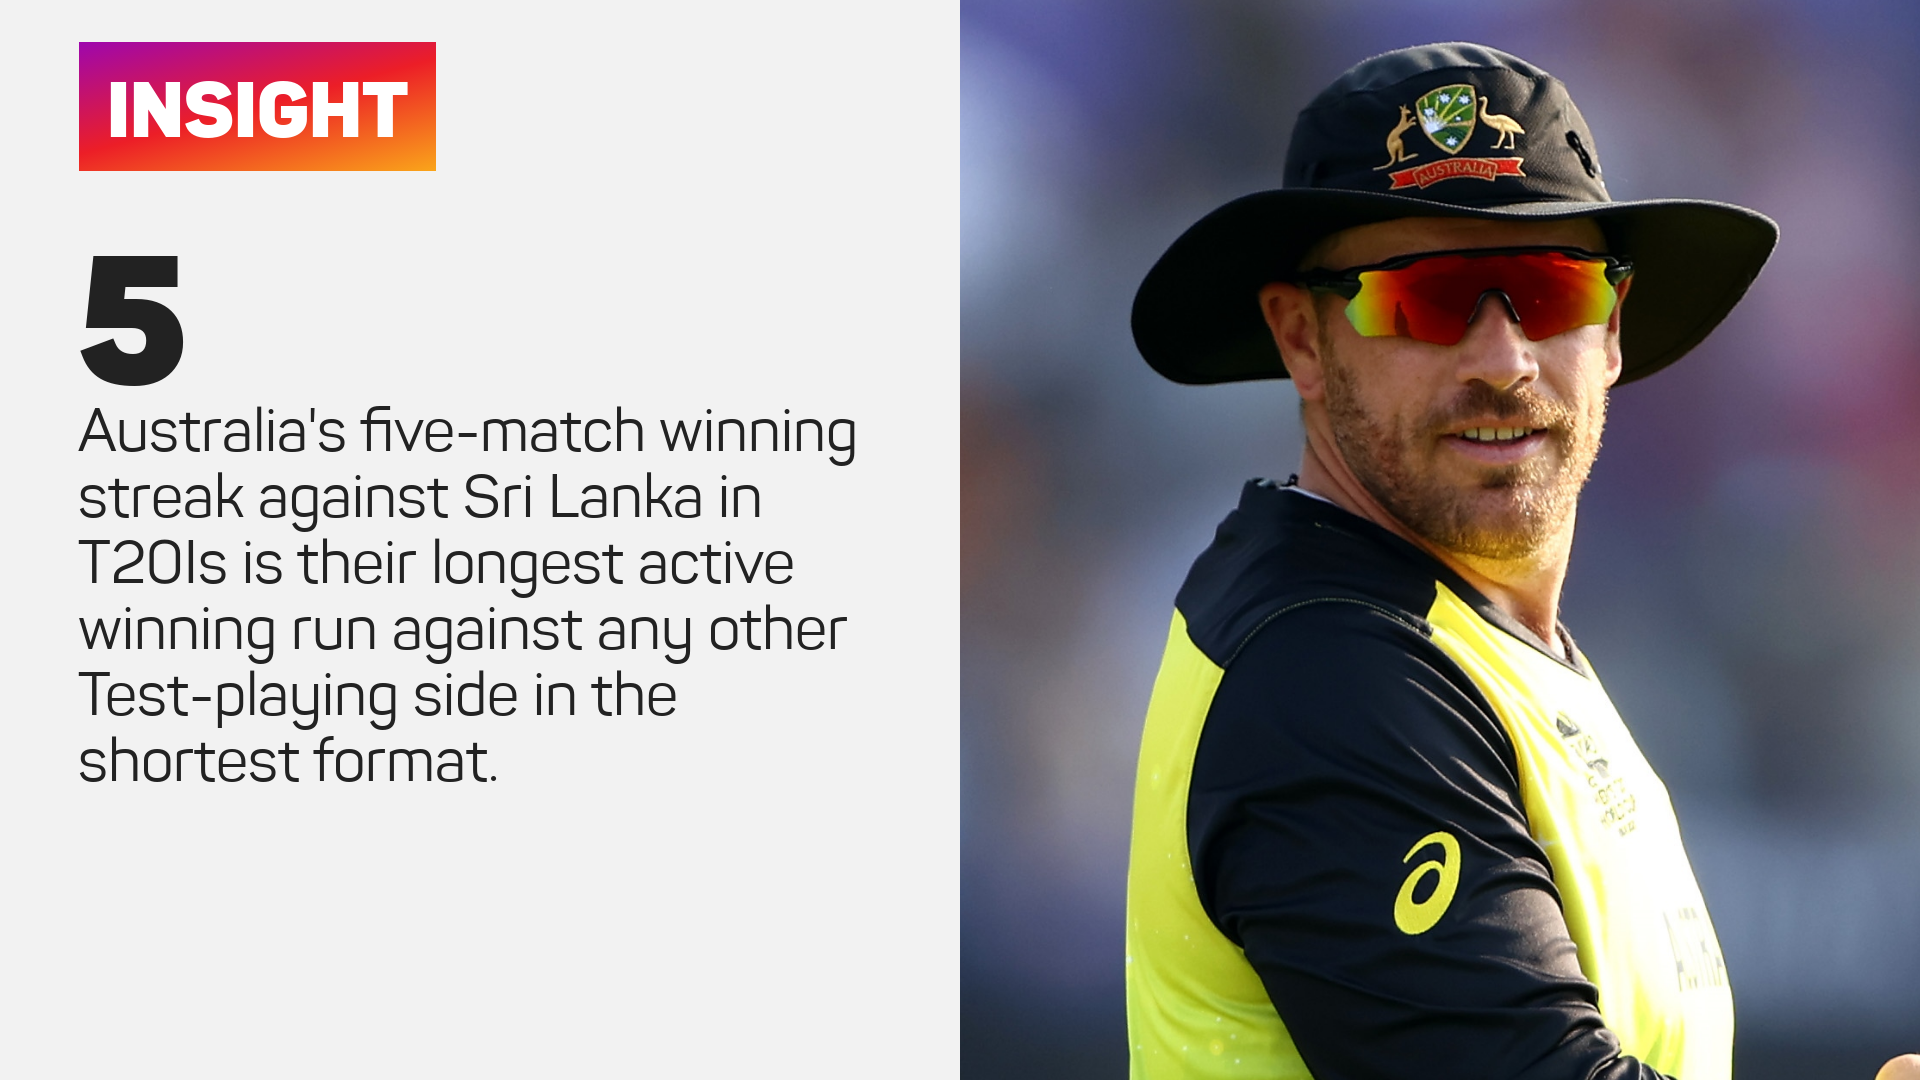 Australia have a great recent record against Sri Lanka